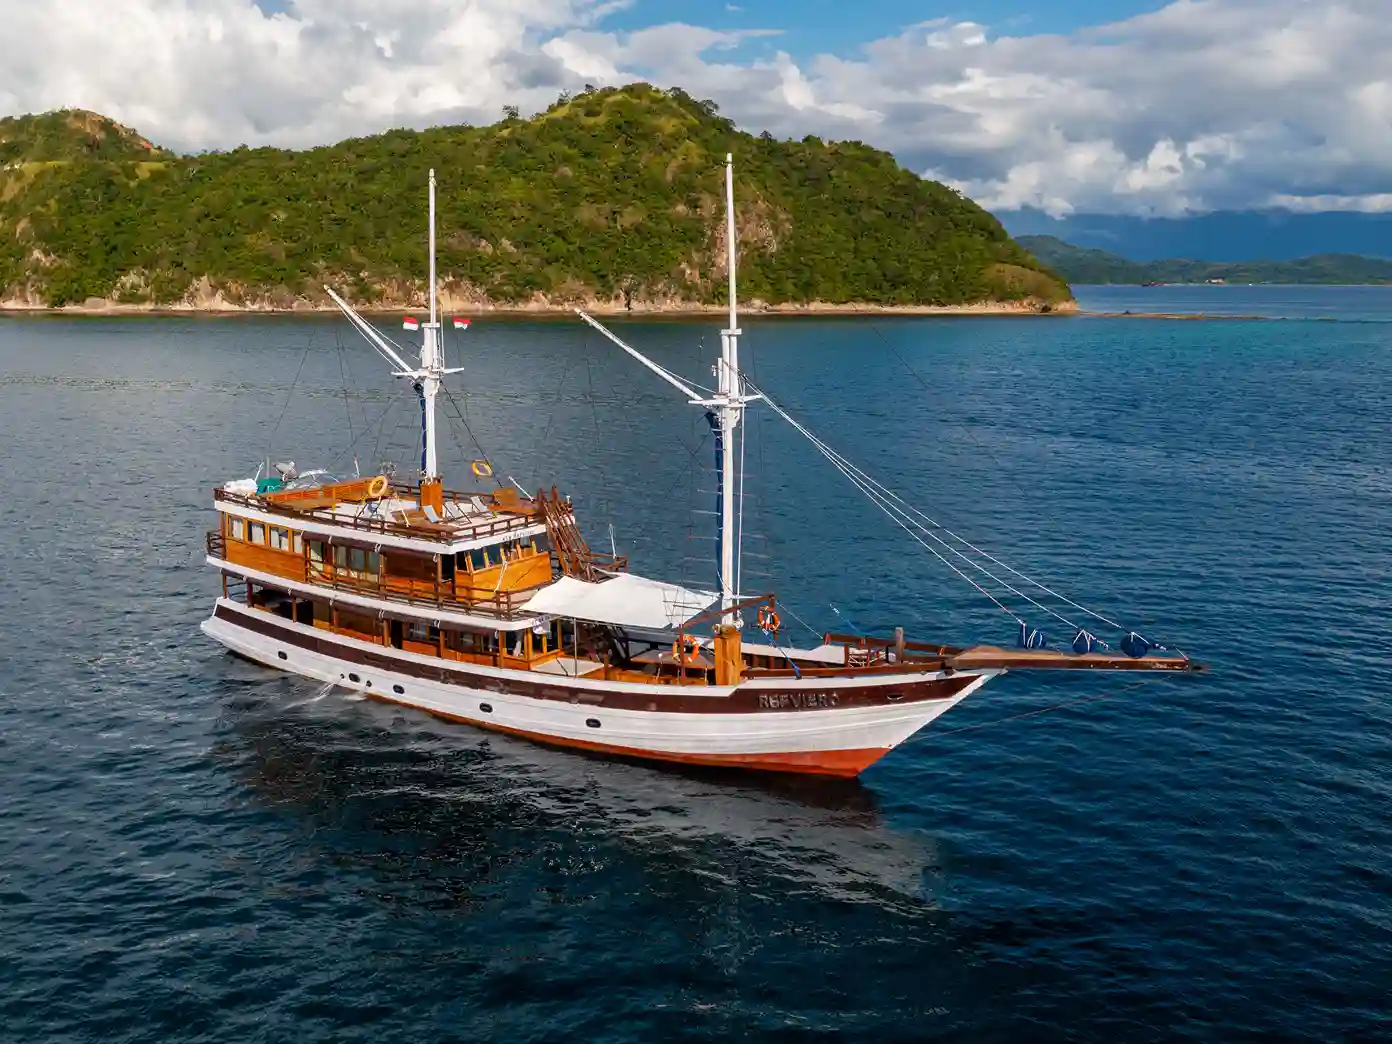 Revfiero Phinisi Boat Charter - IndonesiaJuara